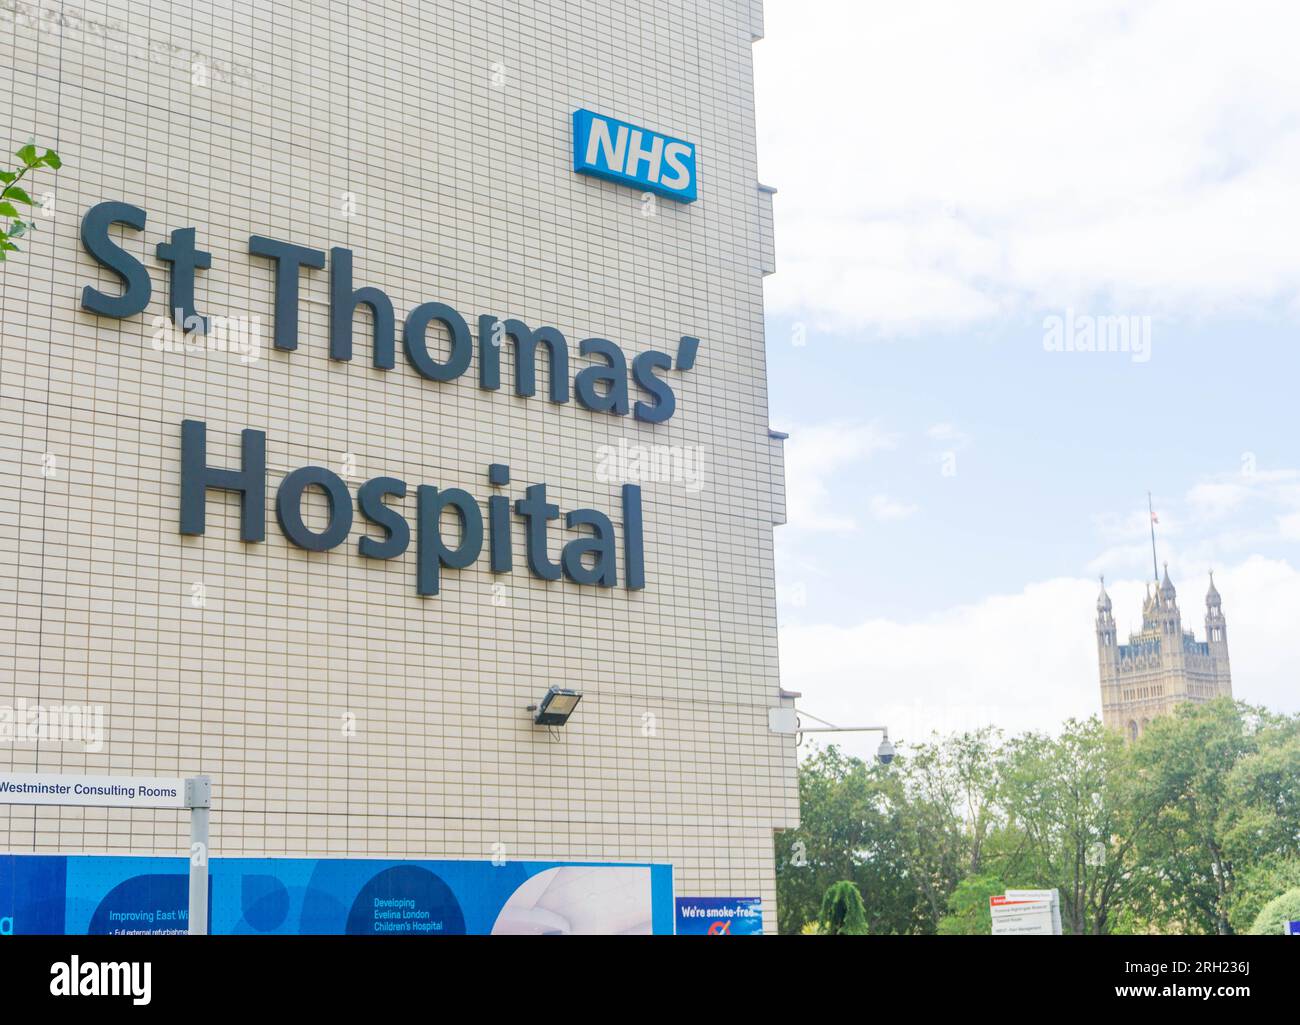 St Thomas Hospital at the bank of the river Thames, London, UK Stock Photo